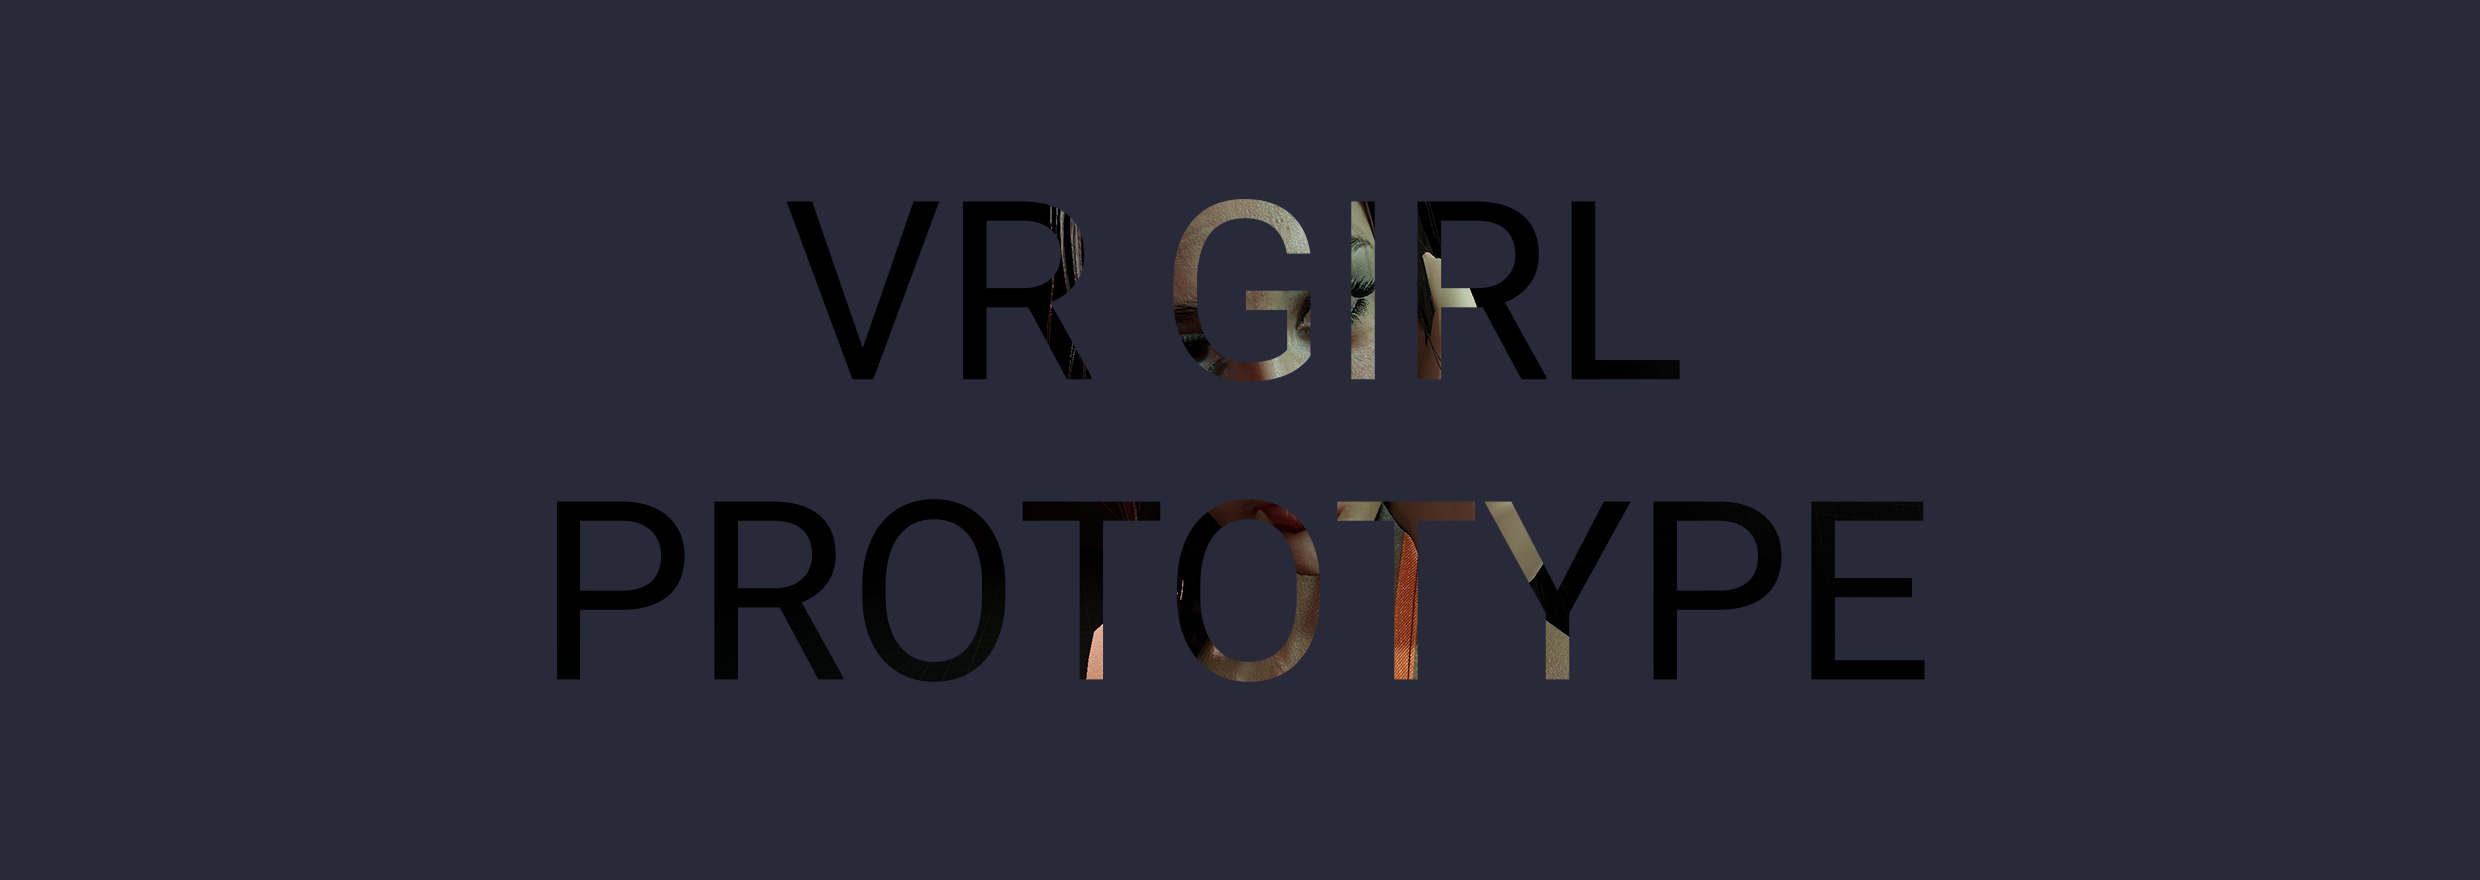 VR Girl Prototype